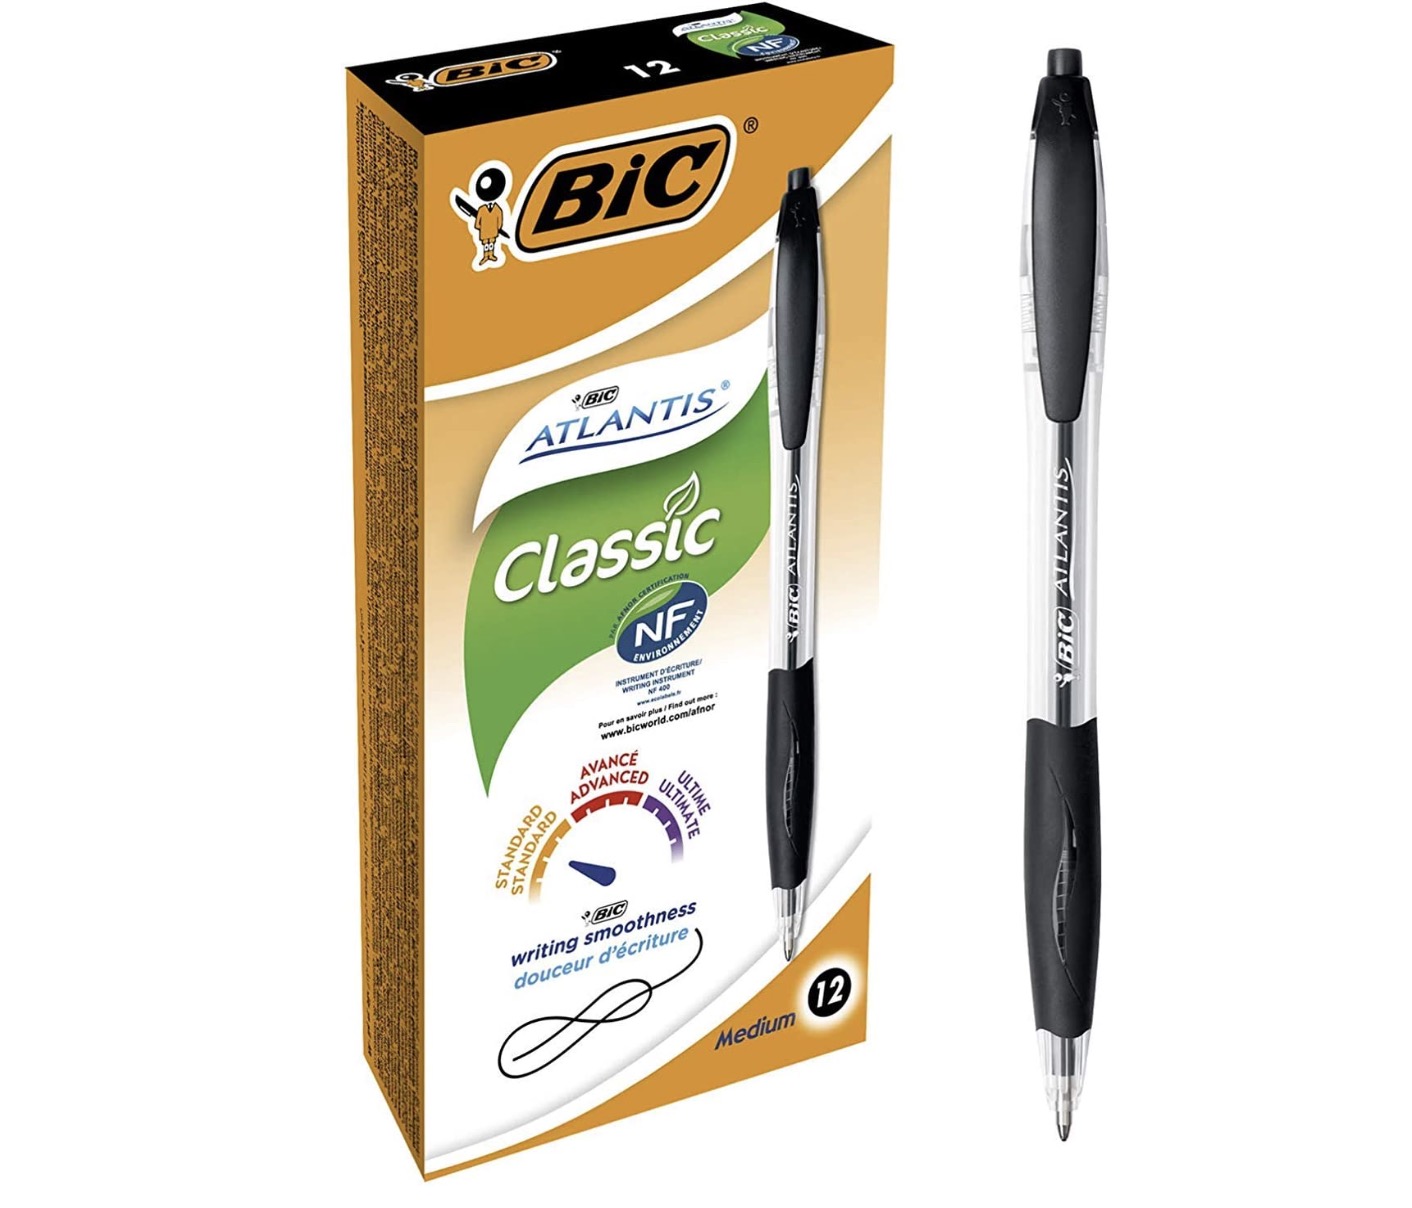 Bolígrafos BIC Atlantis Classic